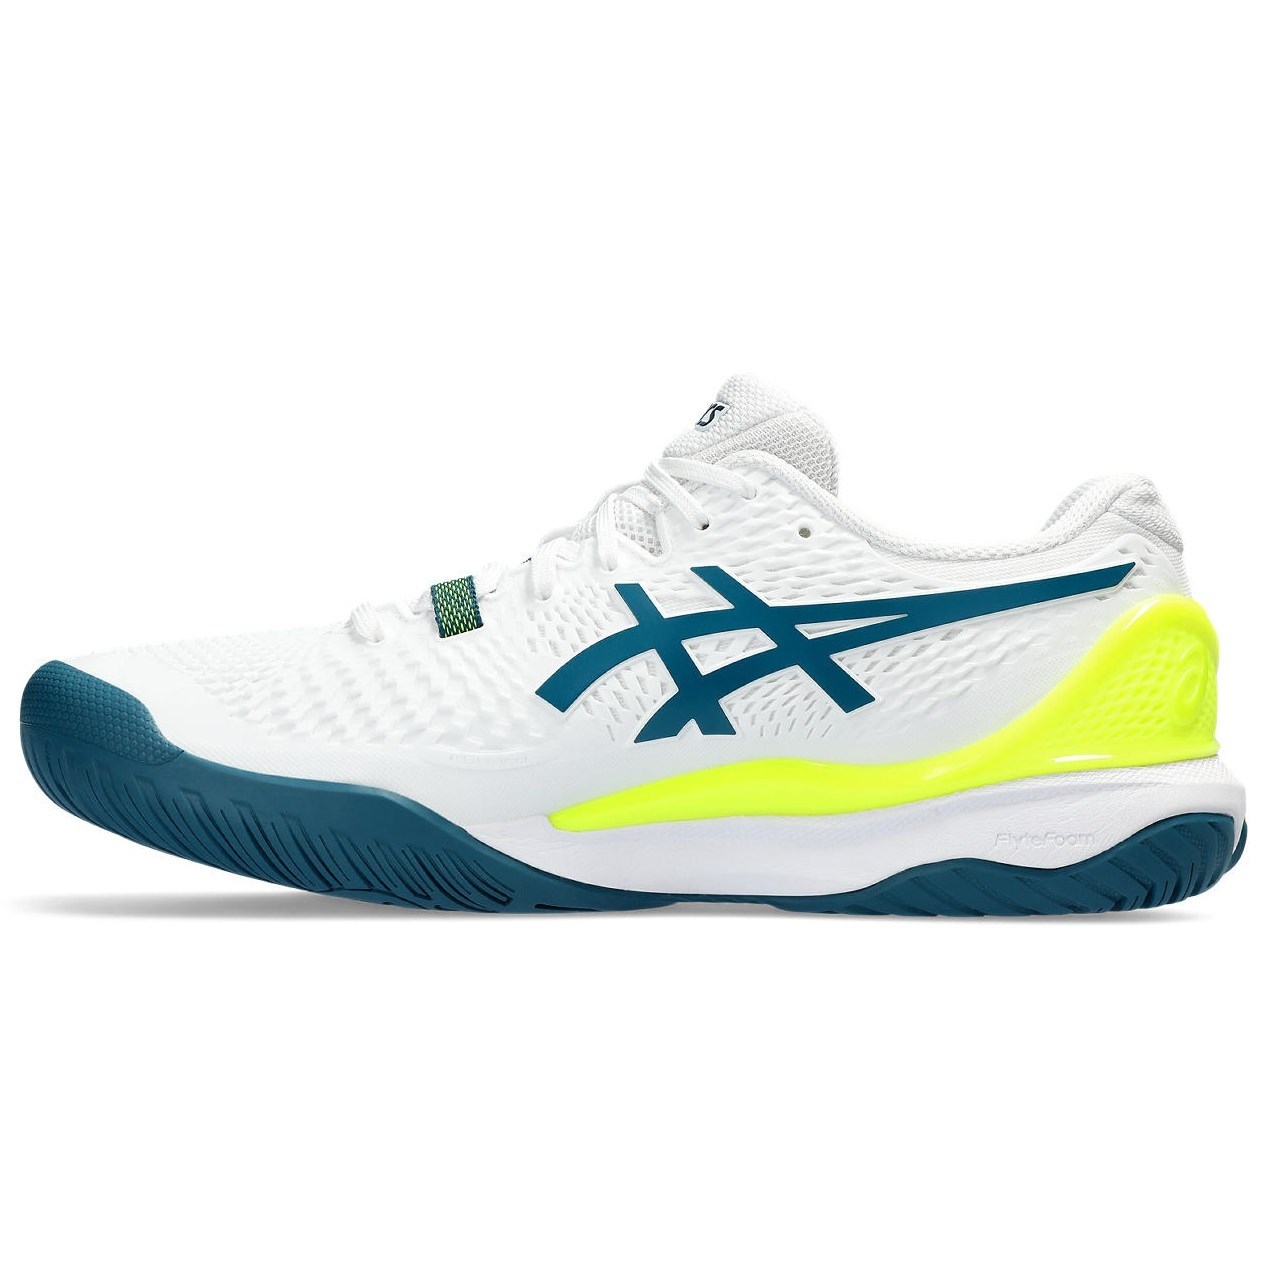 Asics Gel Resolution 9 - Mens Tennis Shoes - White/Restful Teal ...